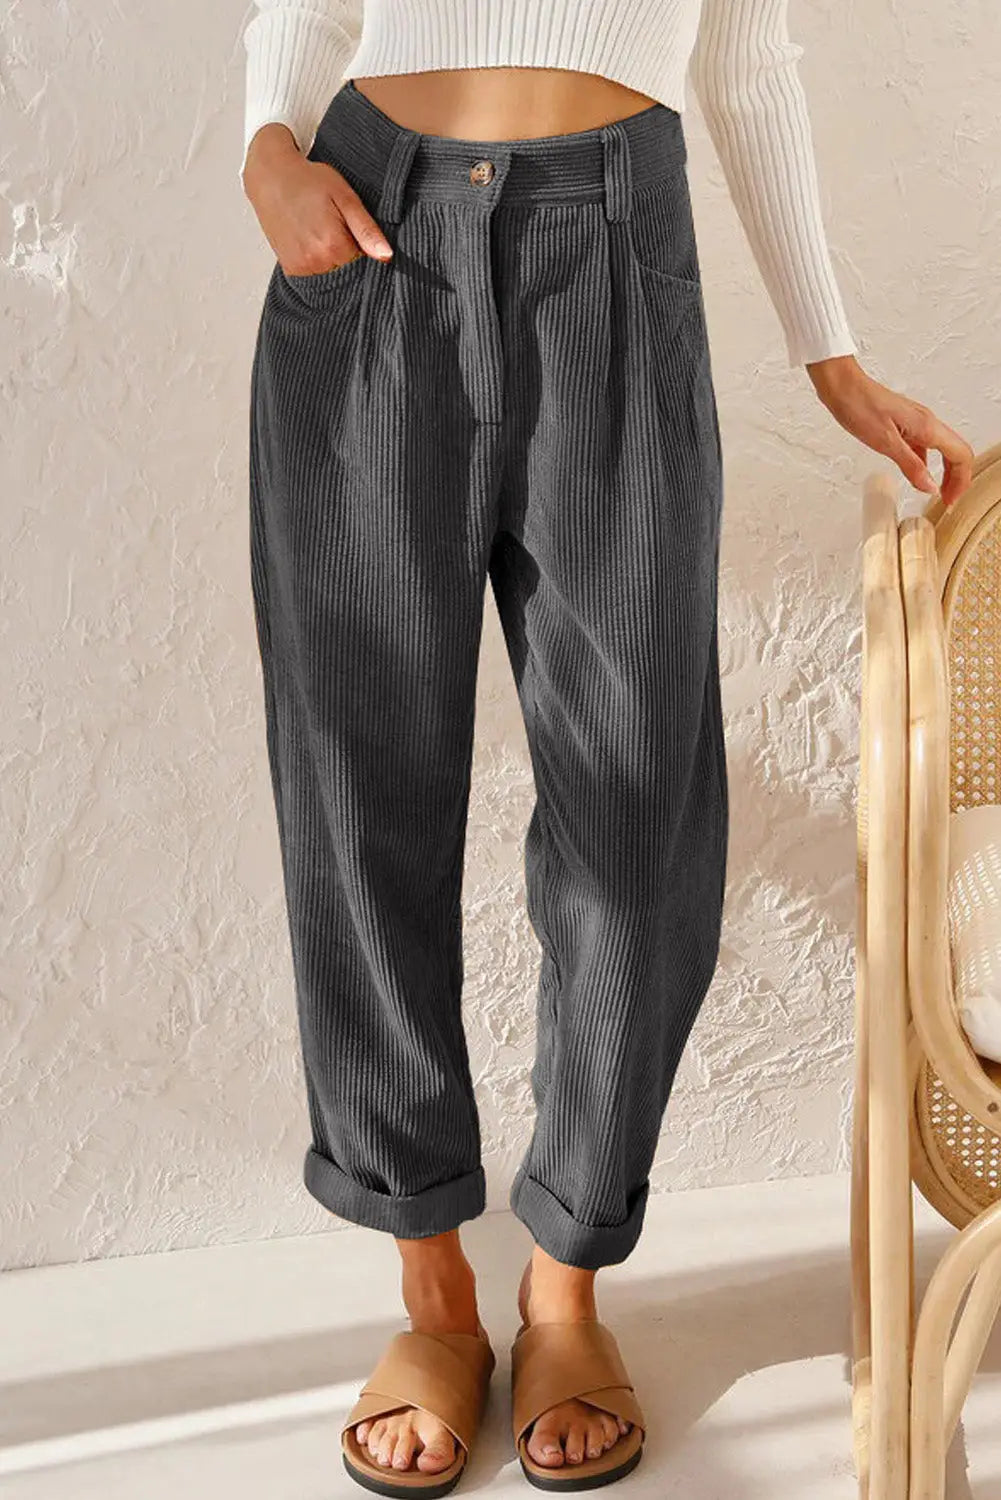 Gray corduroy high waist straight leg pants - 4 / 100% cotton